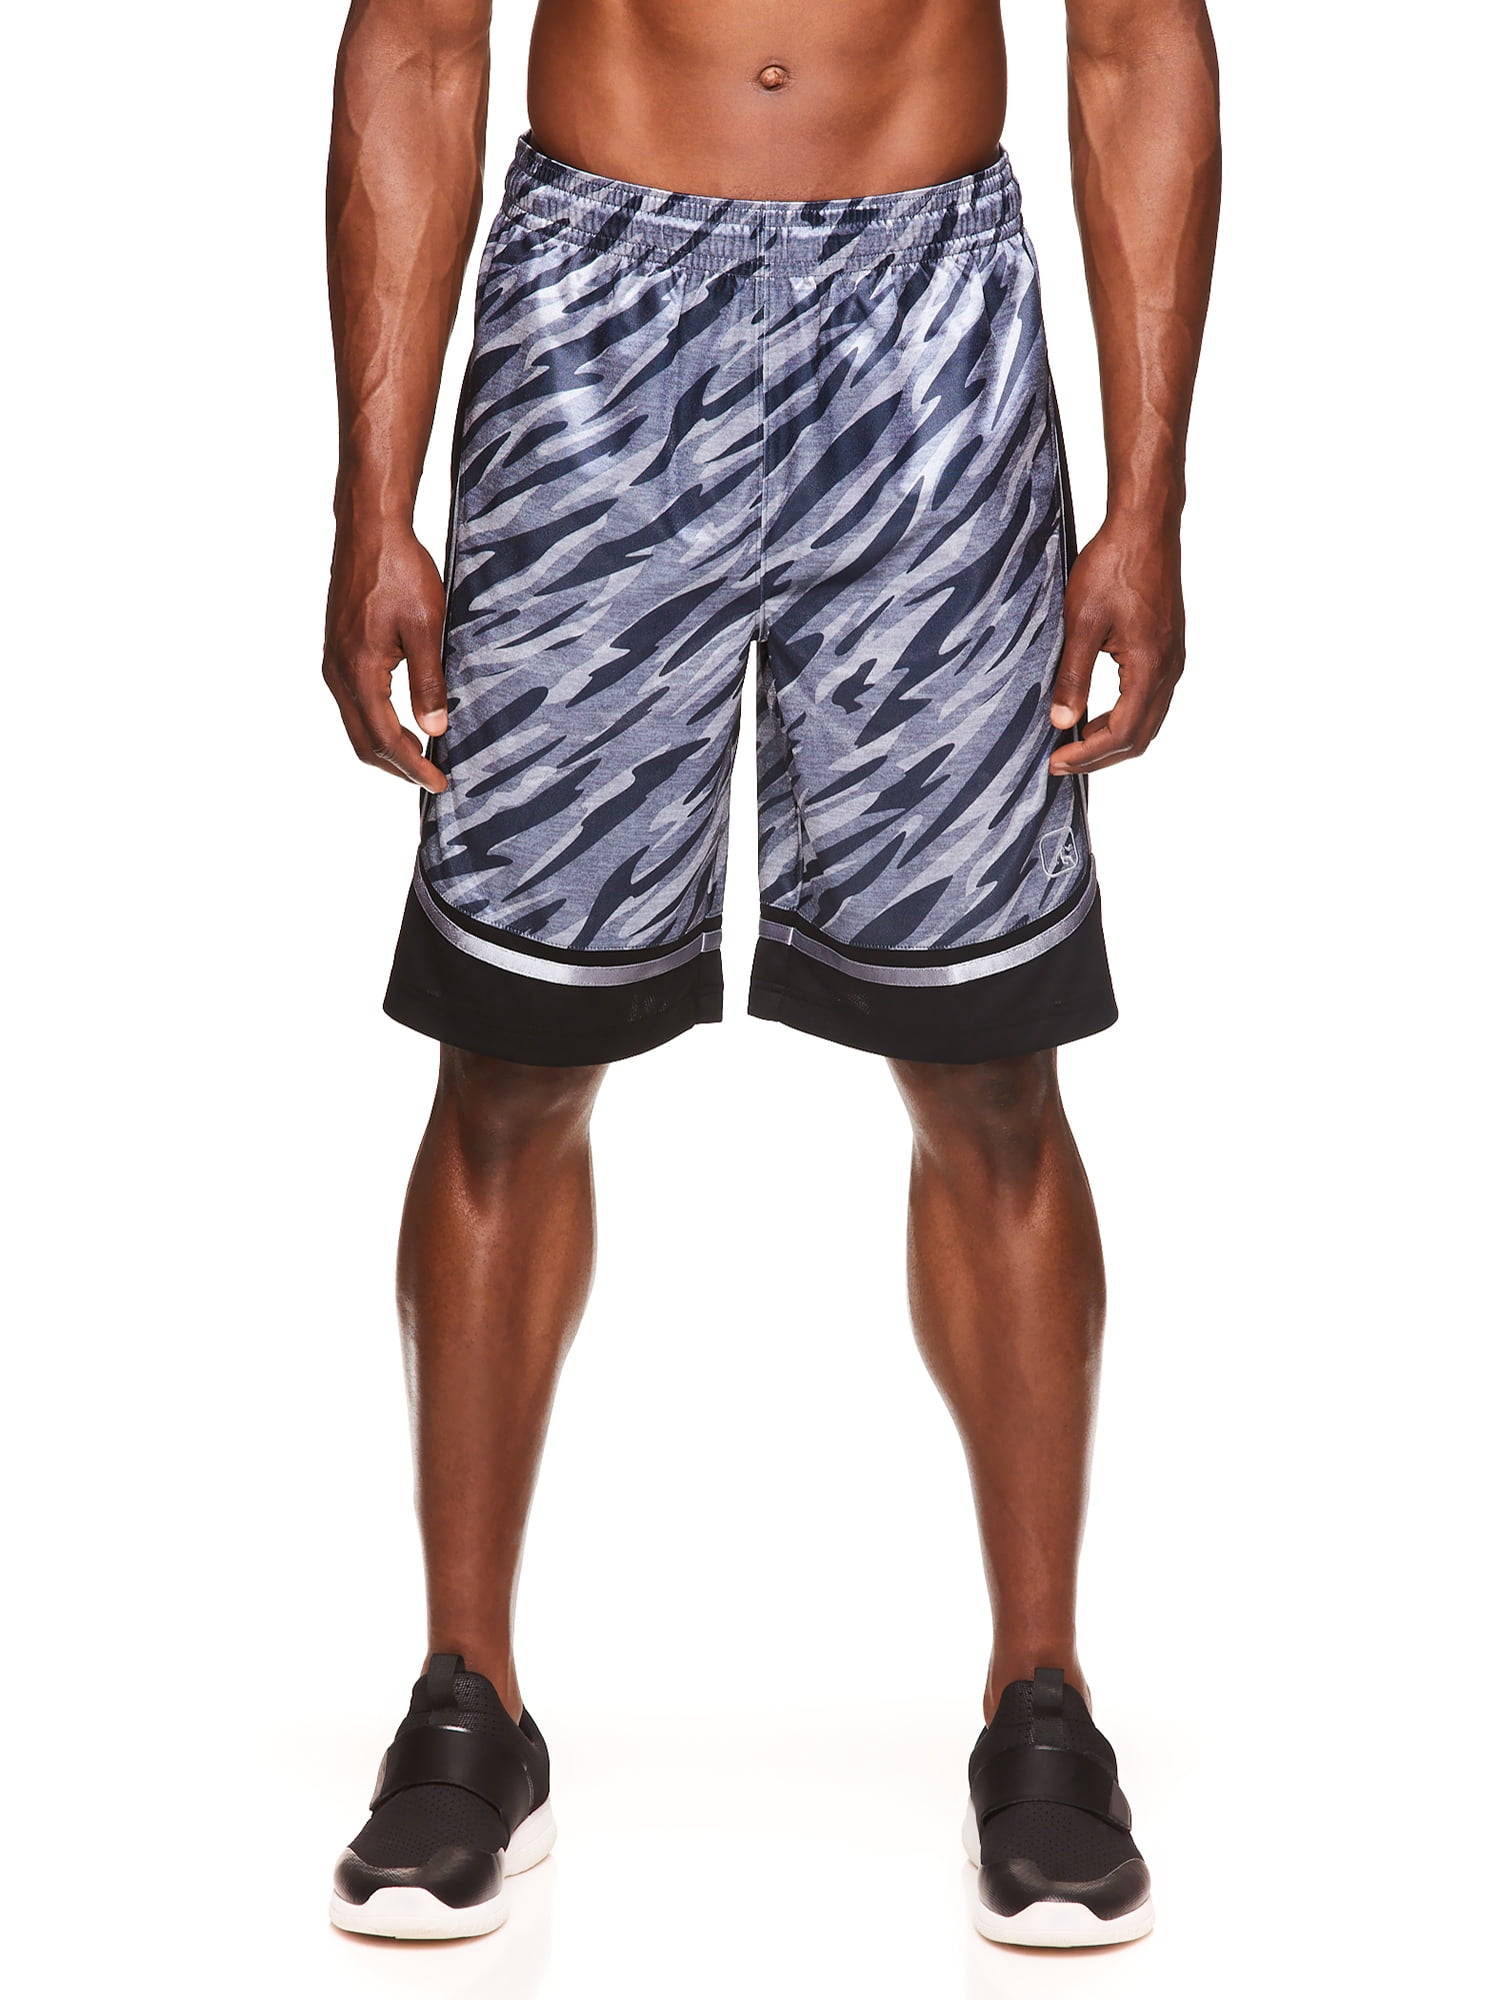 AND1 Black w/Blue Camo Basketball Shorts